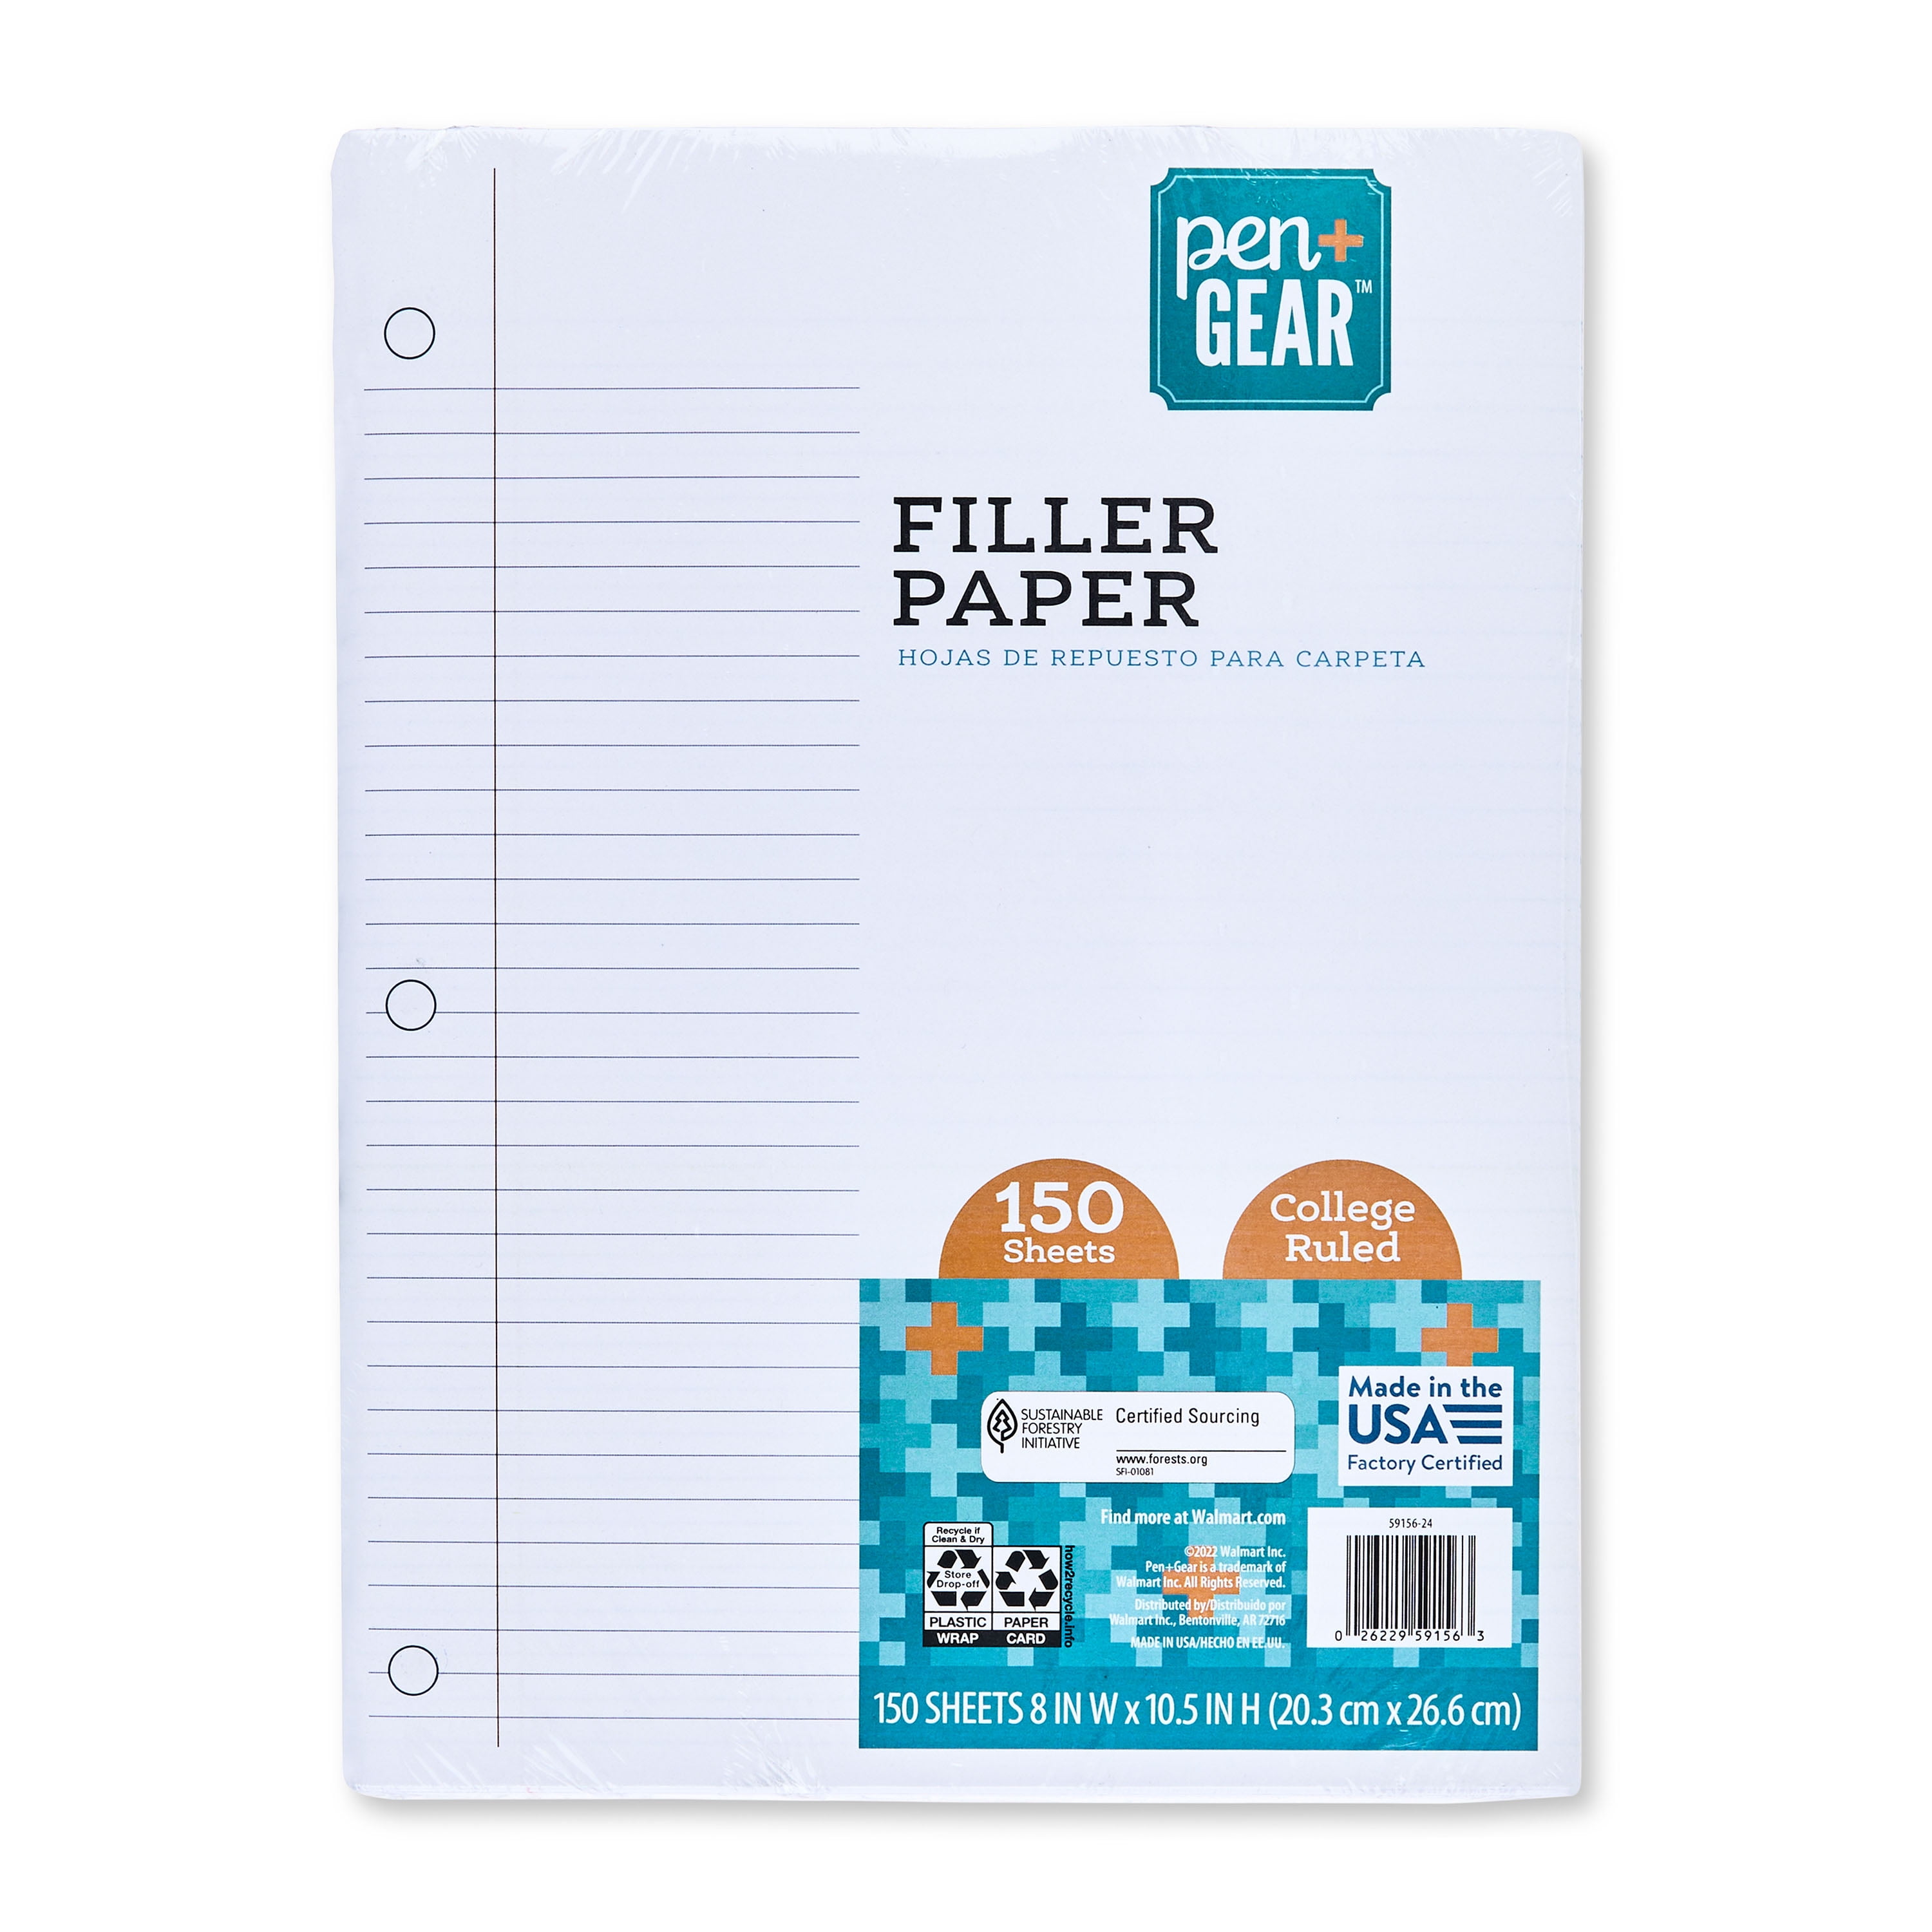 Pen+Gear 150ct Filler Paper College Ruled, 10.5 x 8, 59156 